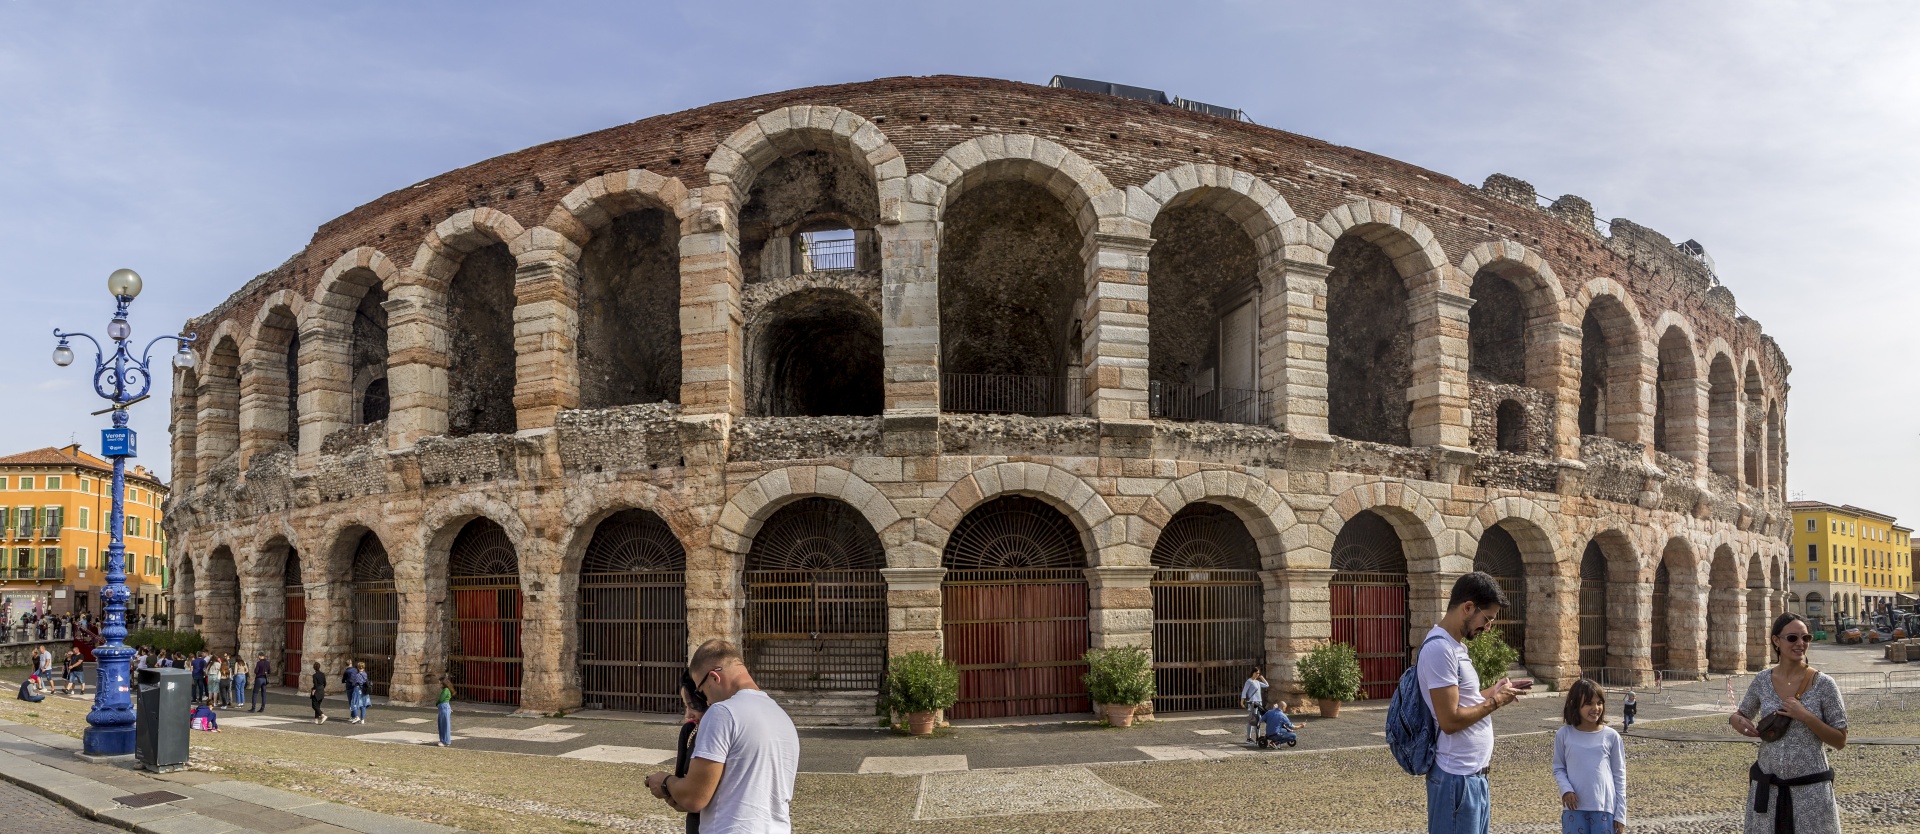 Arena Of Verona